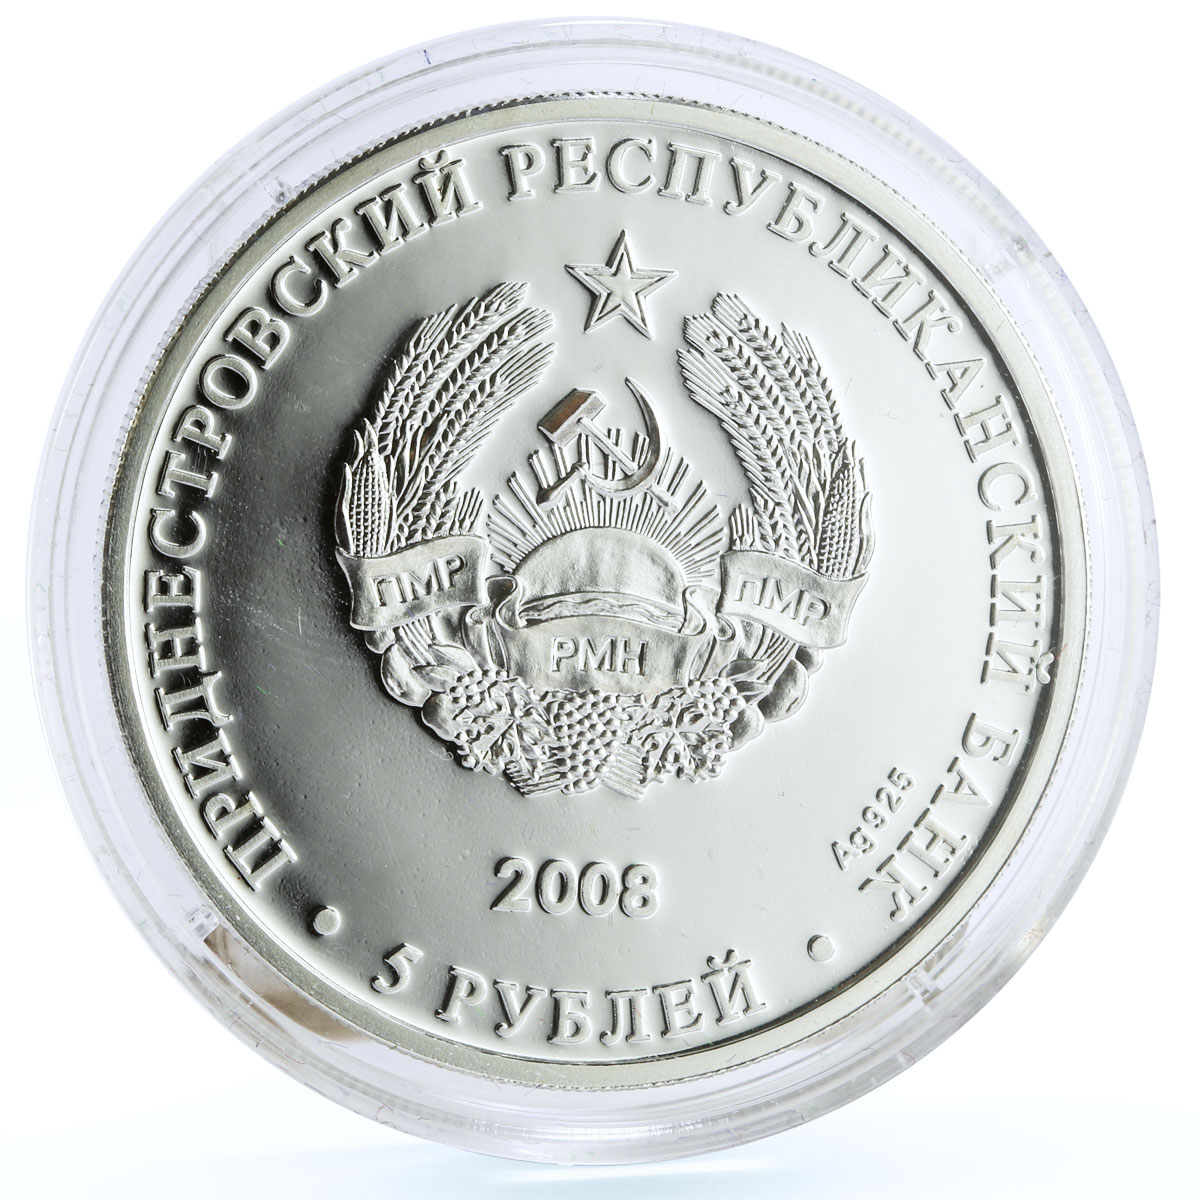 Transnistria 5 rubles Kolkotov Reserve Cave Lion Animals Fauna silver coin 2008